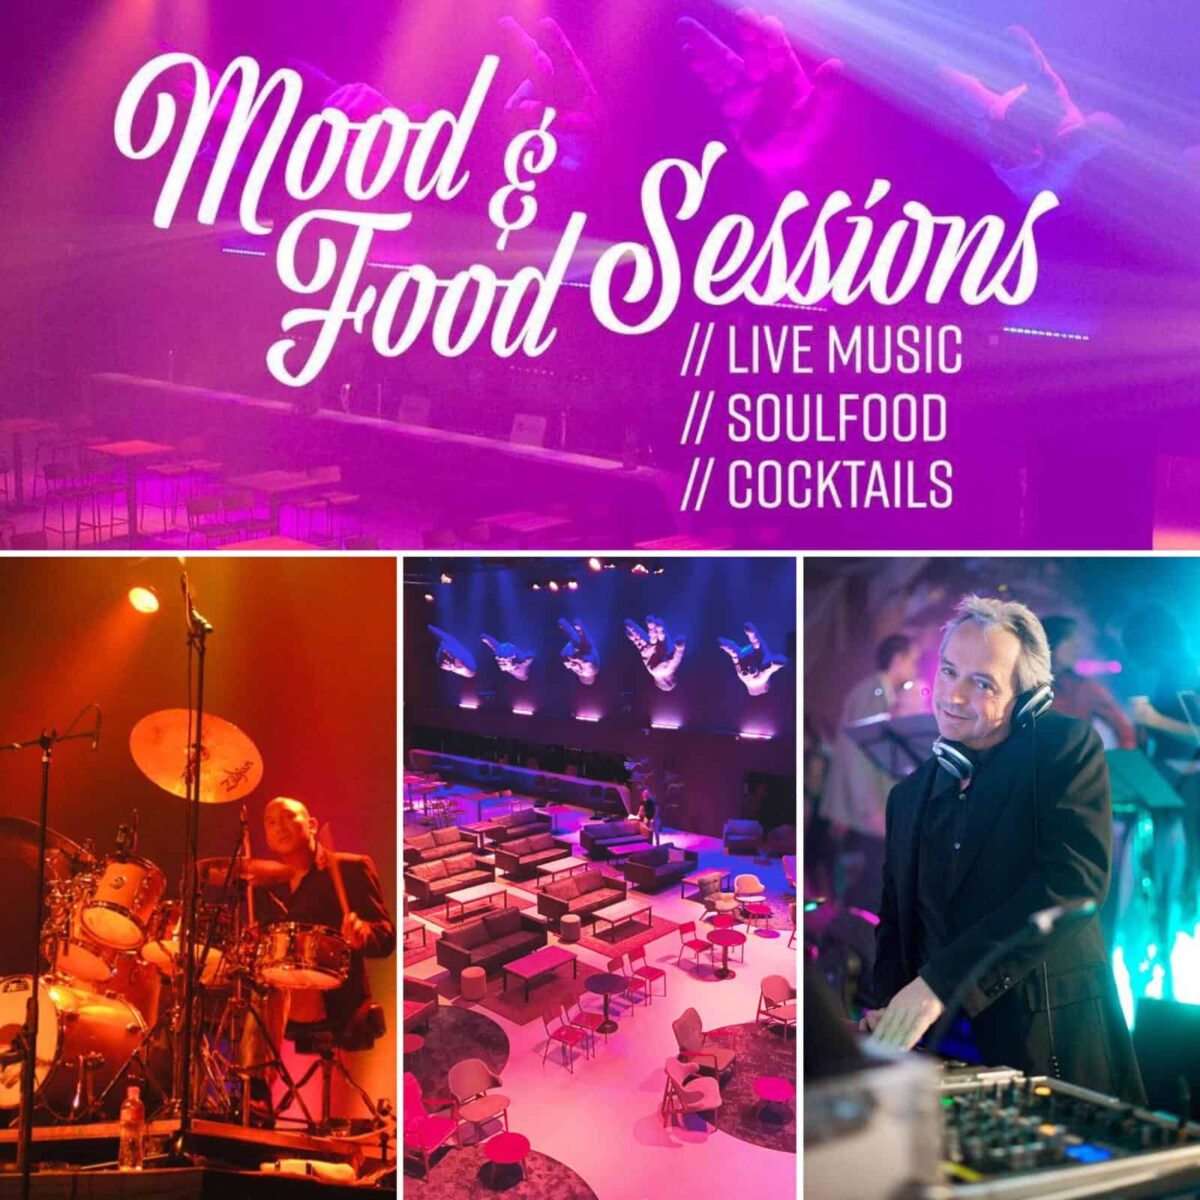 Mood & Food sessions flyer